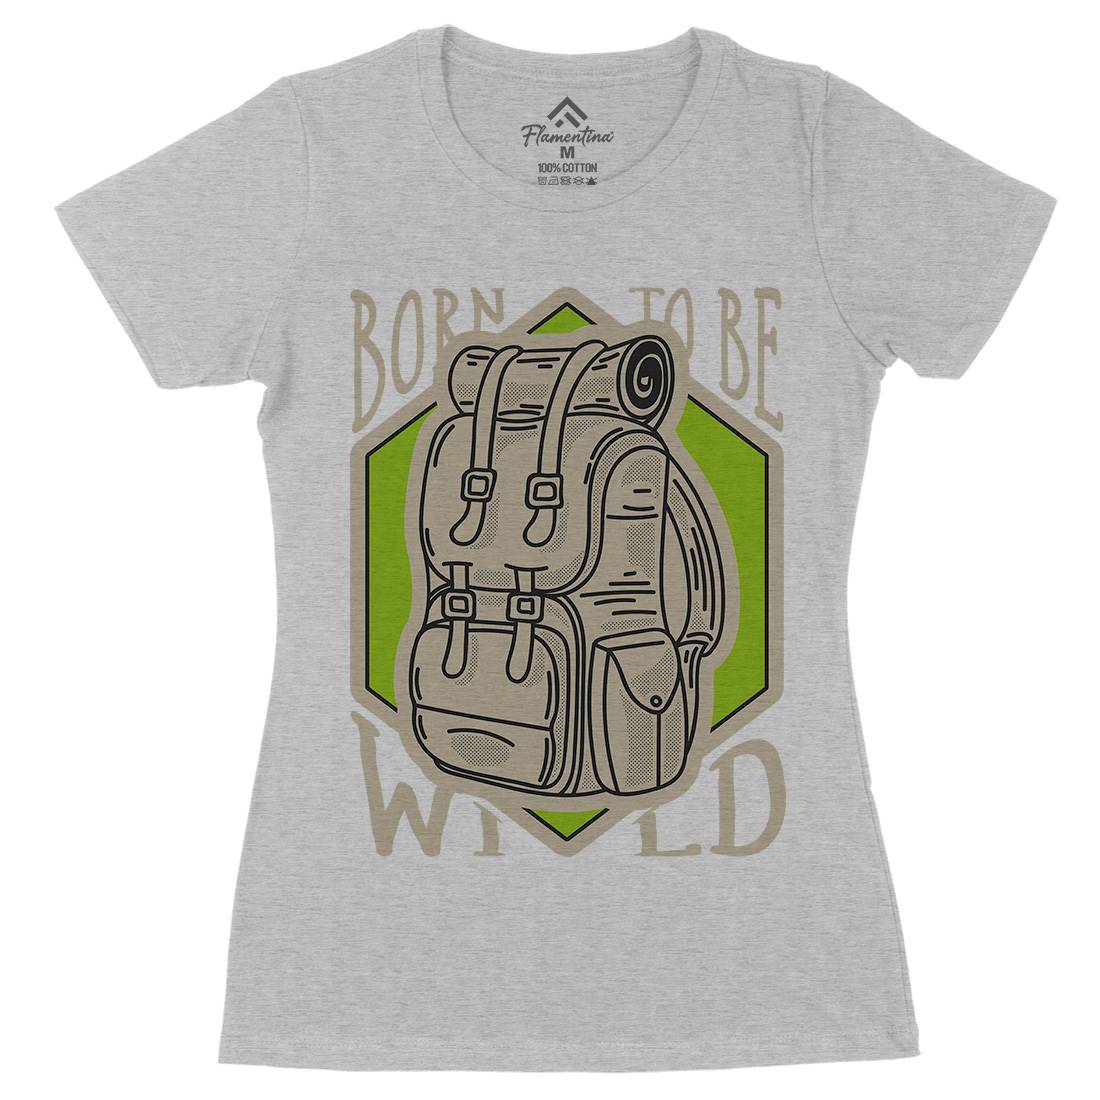 Born To Be Wild Womens Organic Crew Neck T-Shirt Nature D912